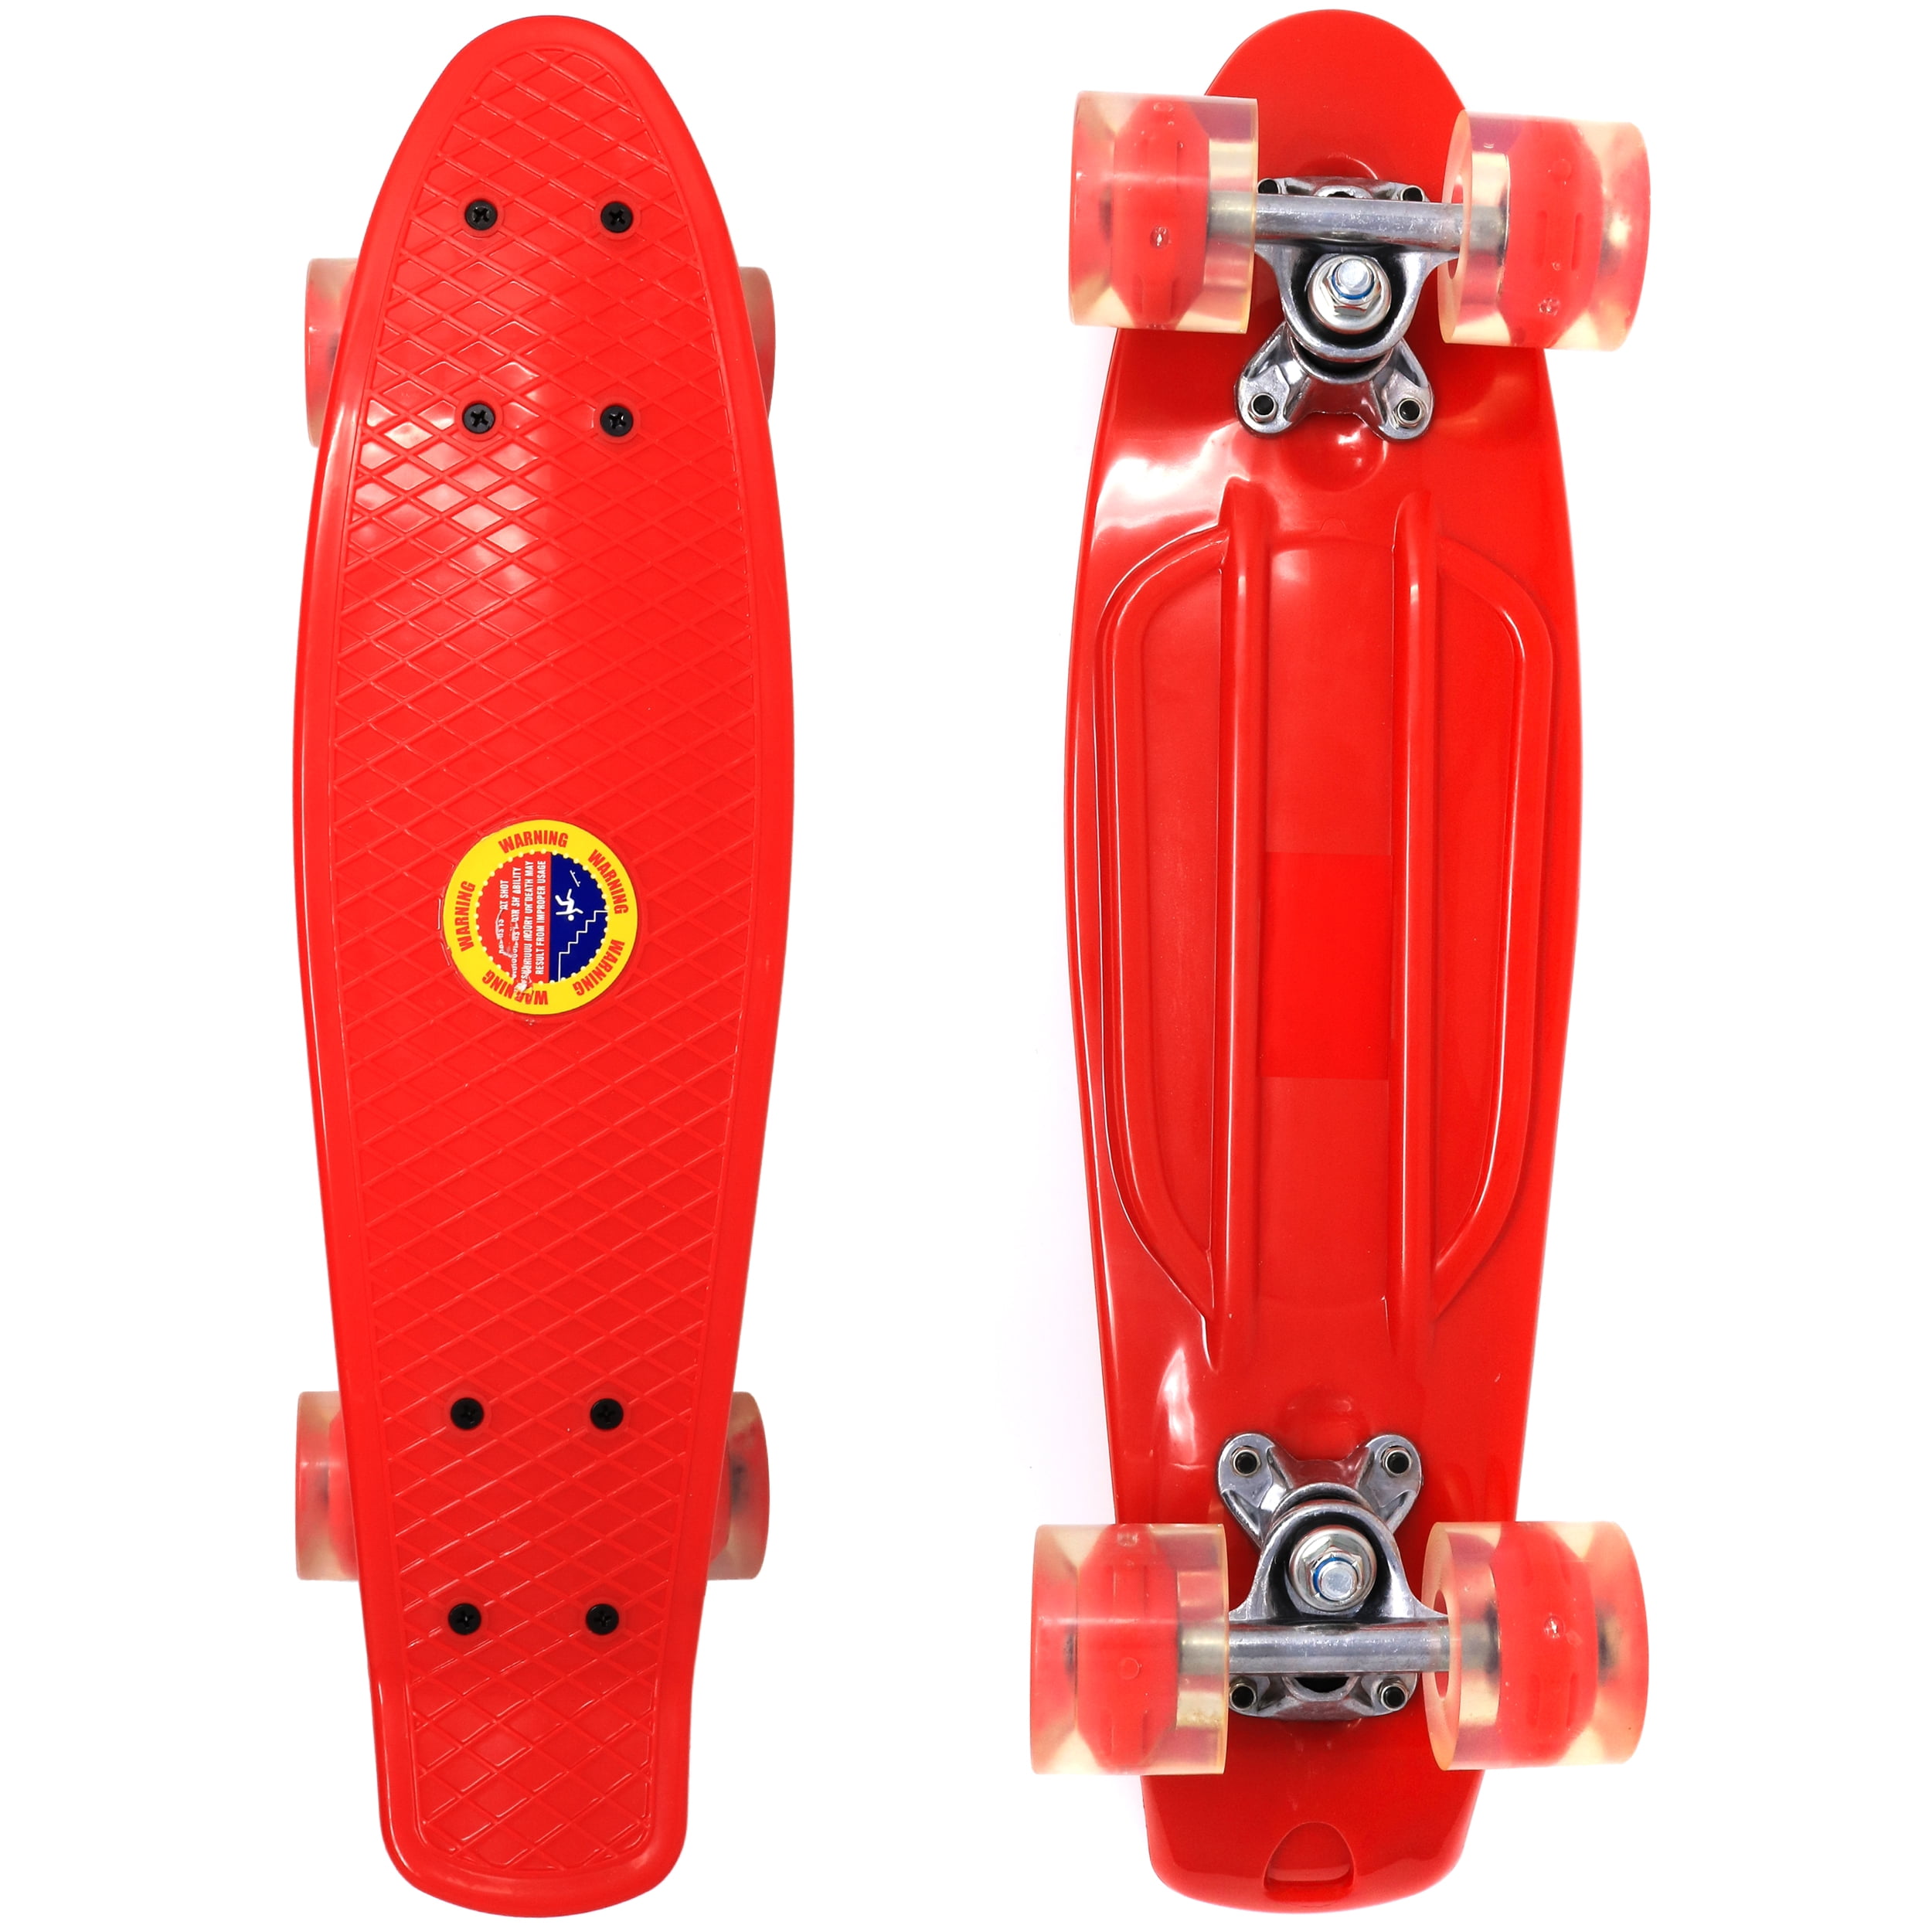 Land Surfer Cruiser Skateboard 22" CLEAR RED BOARD LED RED WHEELS 